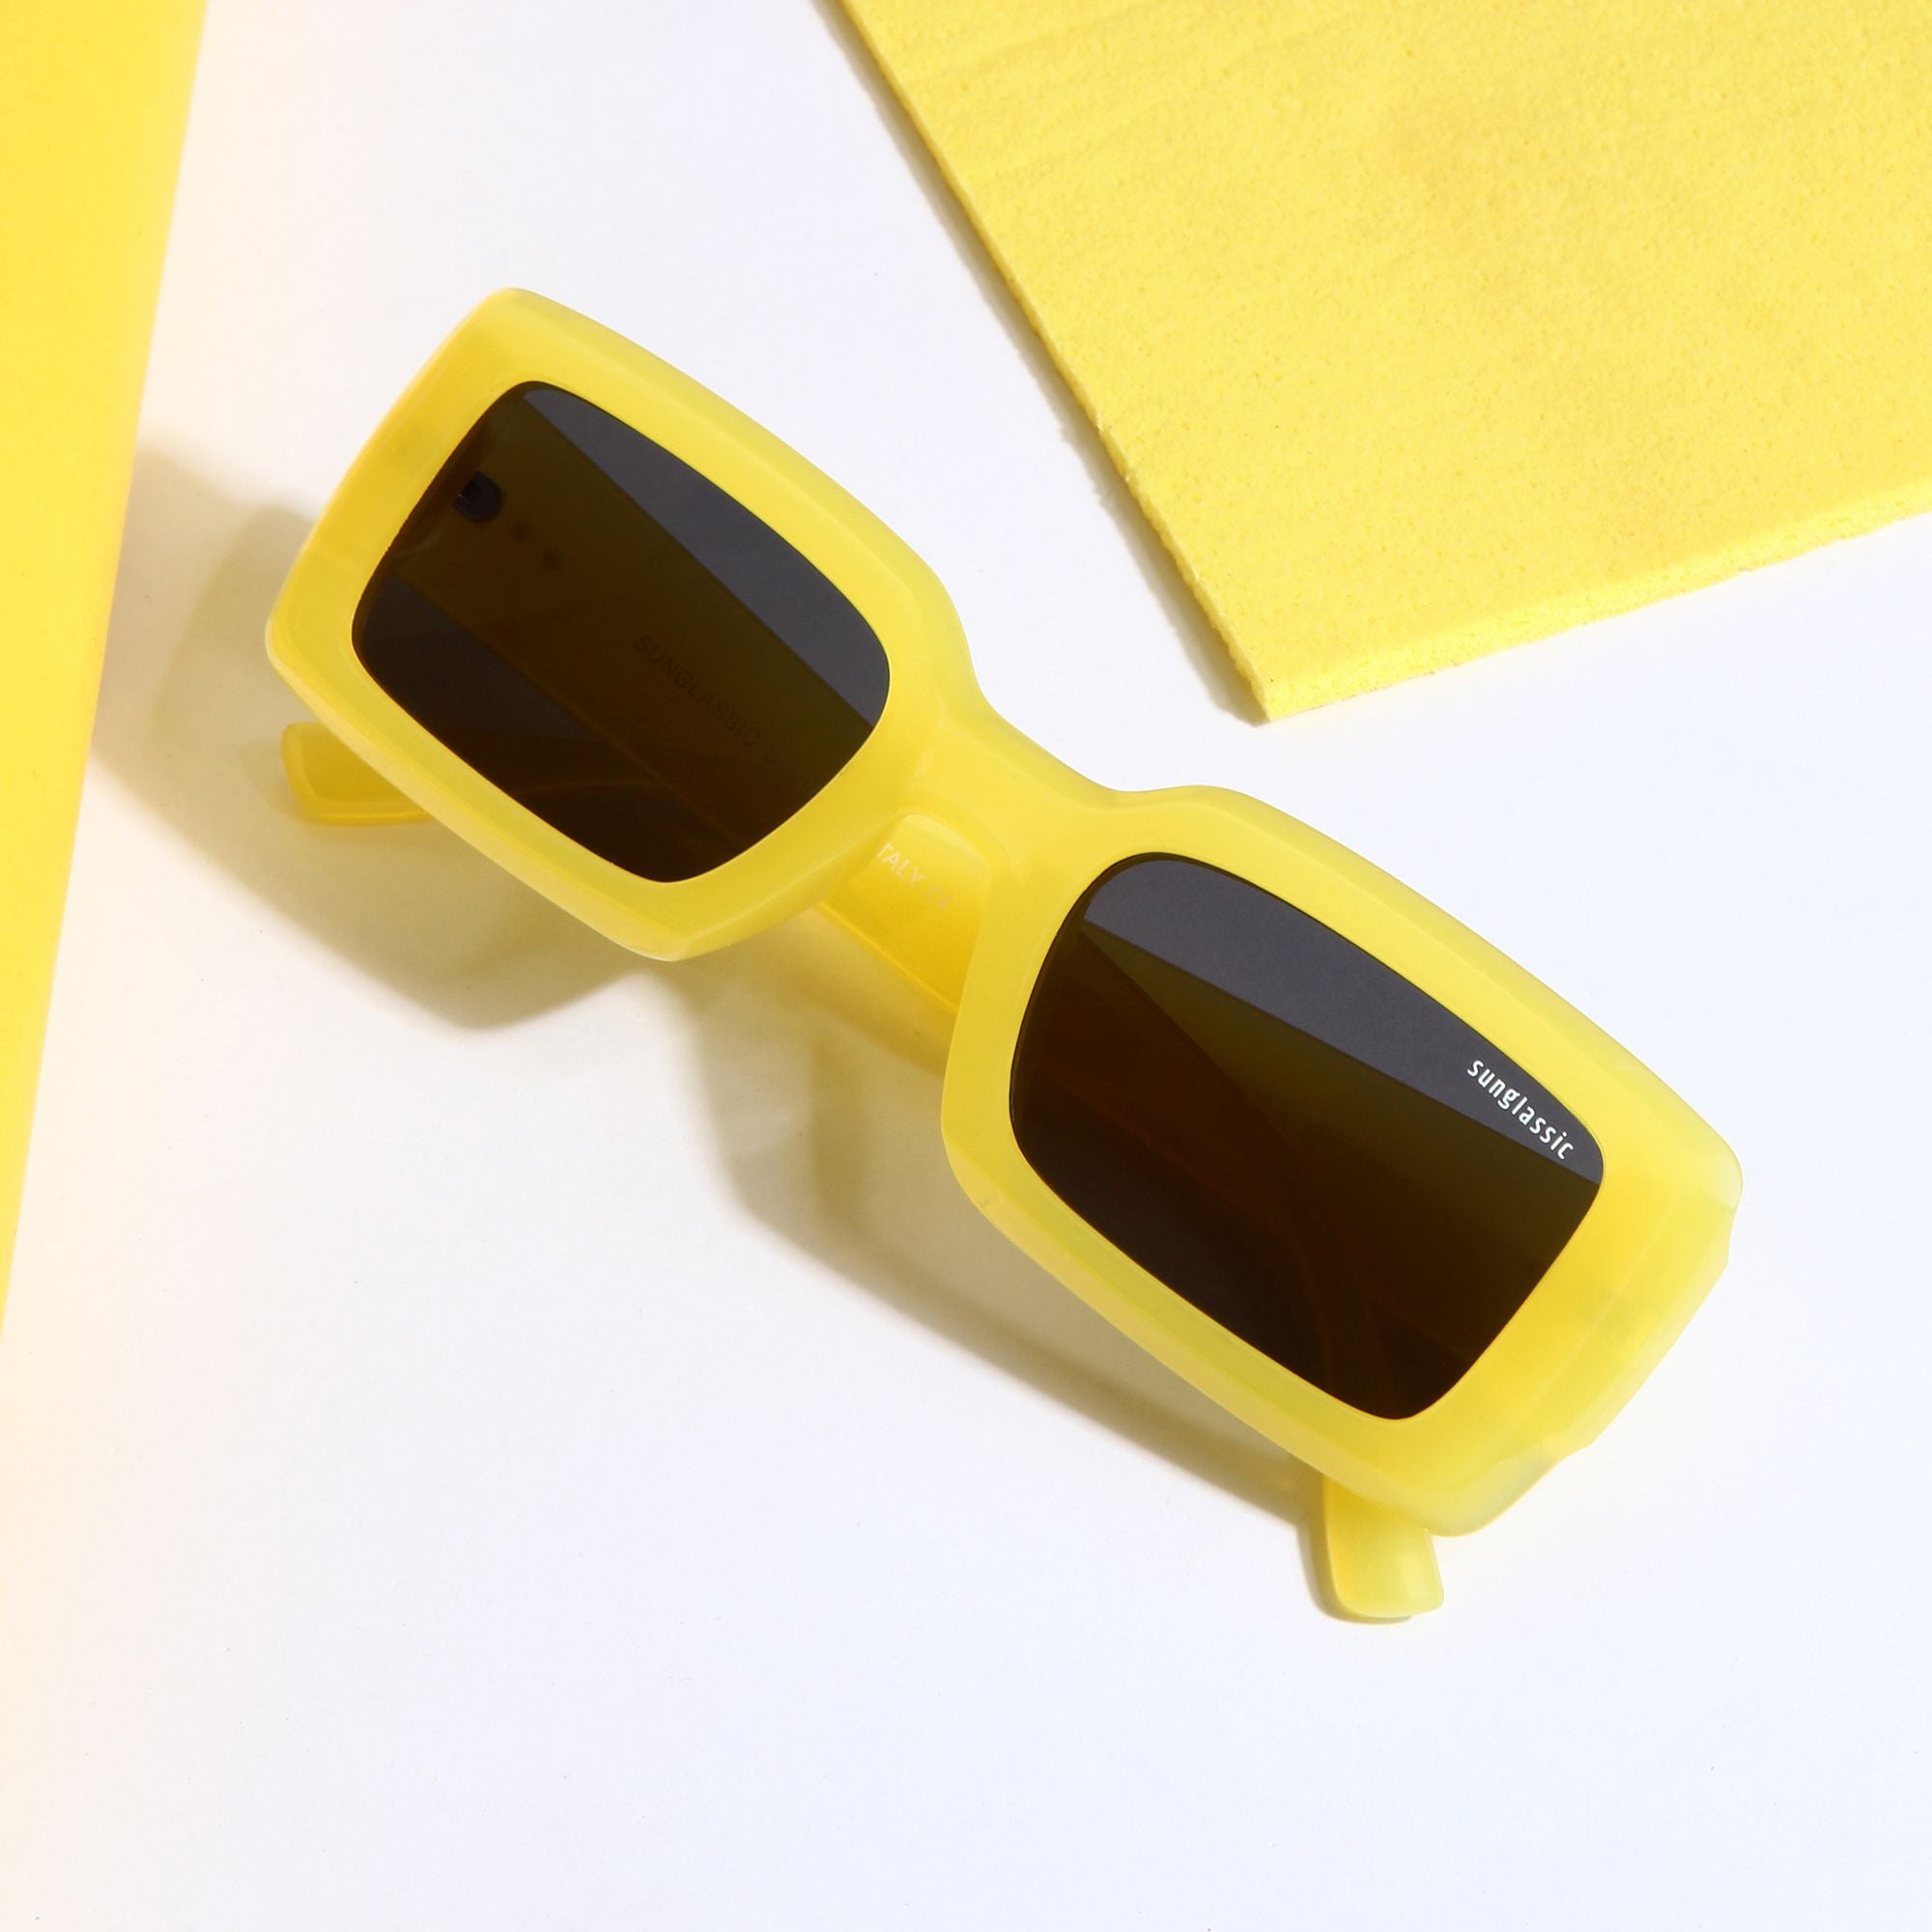 Victoria. Yellow Black Polarized Rectangle Sunglasses